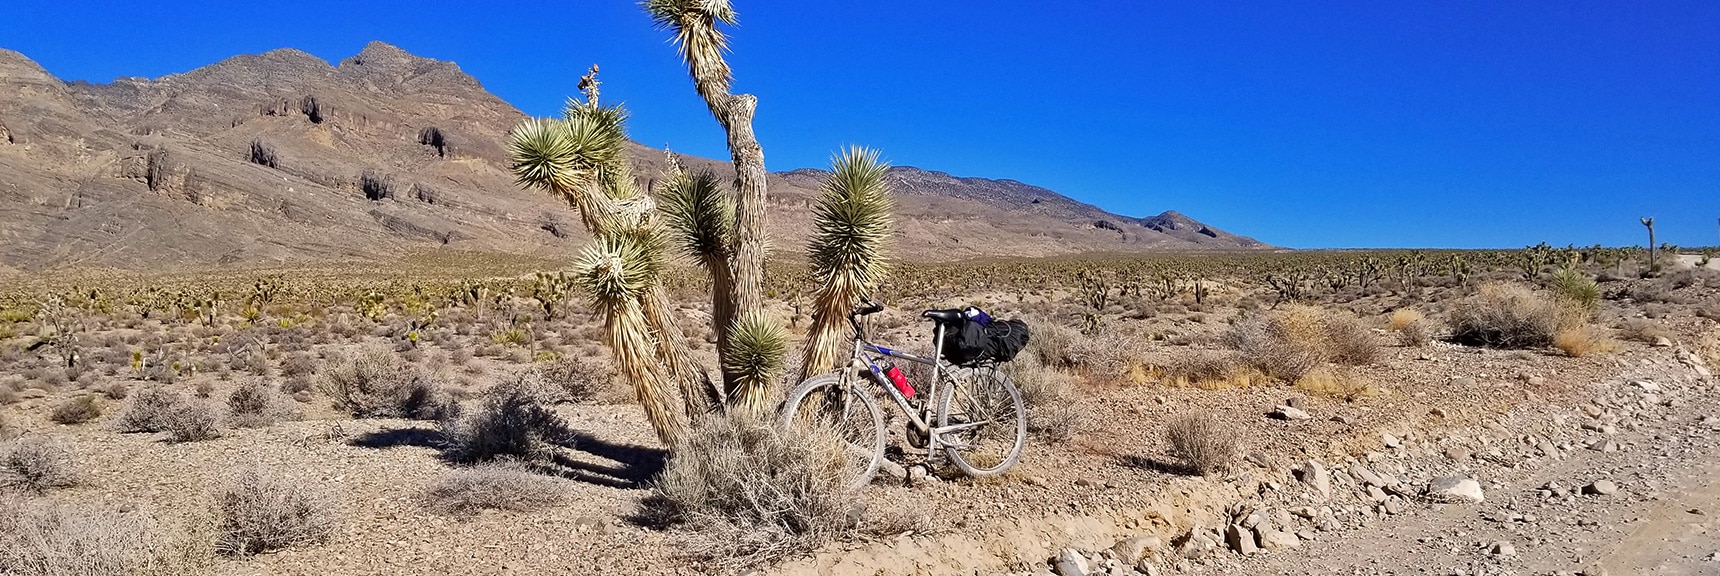 Mountain Bike Resting on Huge Joshua Tree in Yucca Forest | Lower Mormon Well Road | Sheep Range, Desert National Wildlife Refuge, Nevada